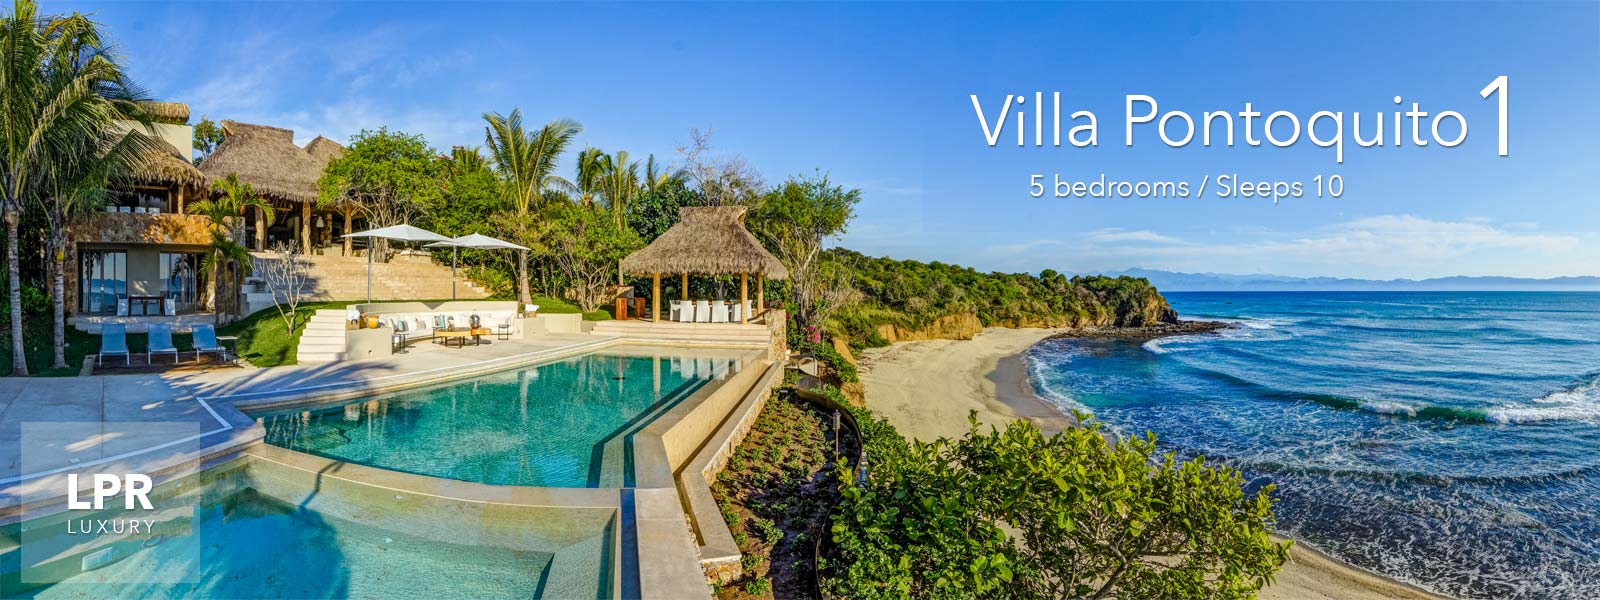 Villa Pontoquito 1 - Luxury Puerto Vallarta Real Estate